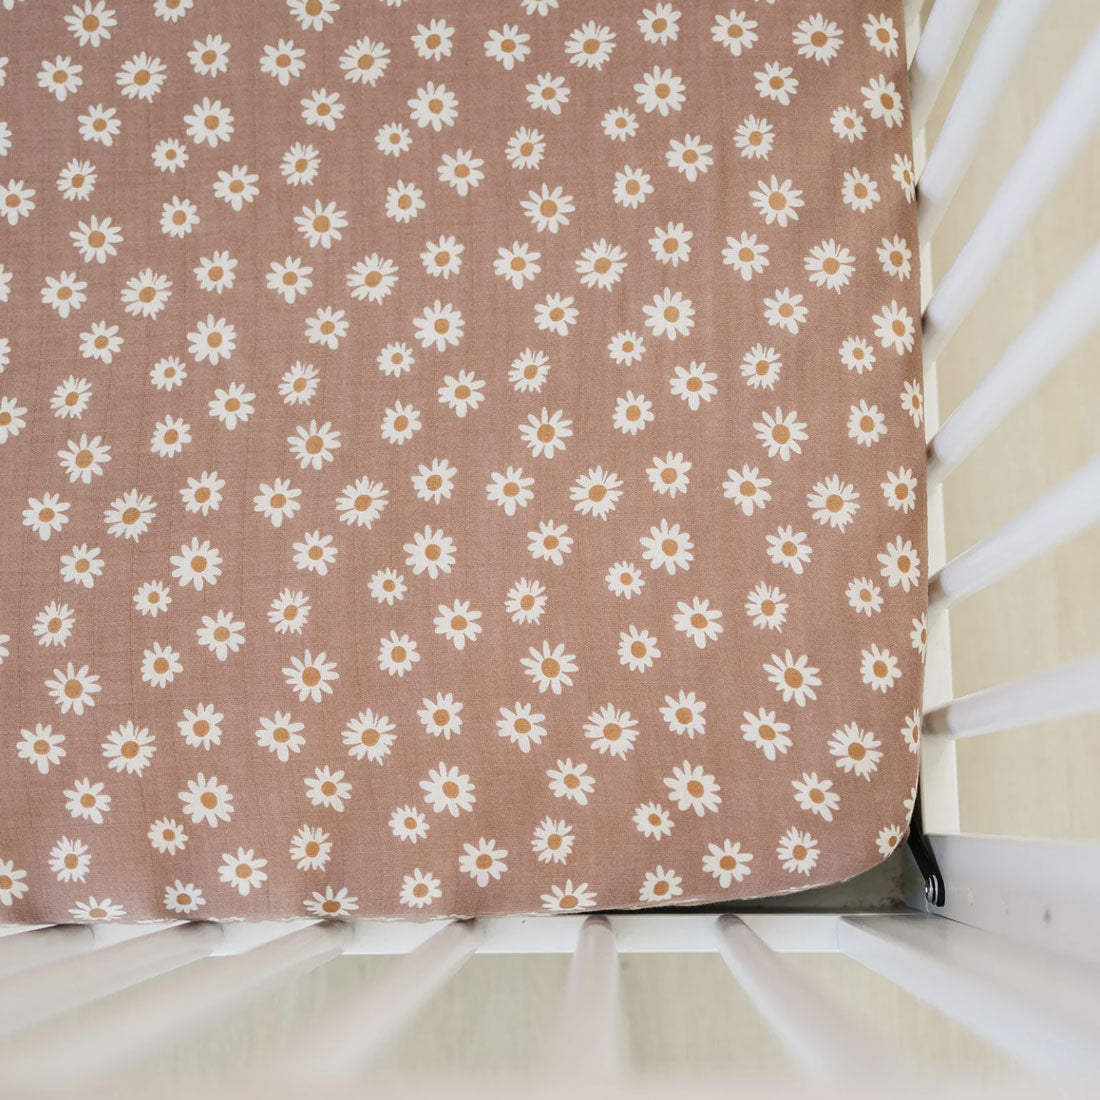 Cotton Muslin Crib Sheet - Daisy Dream